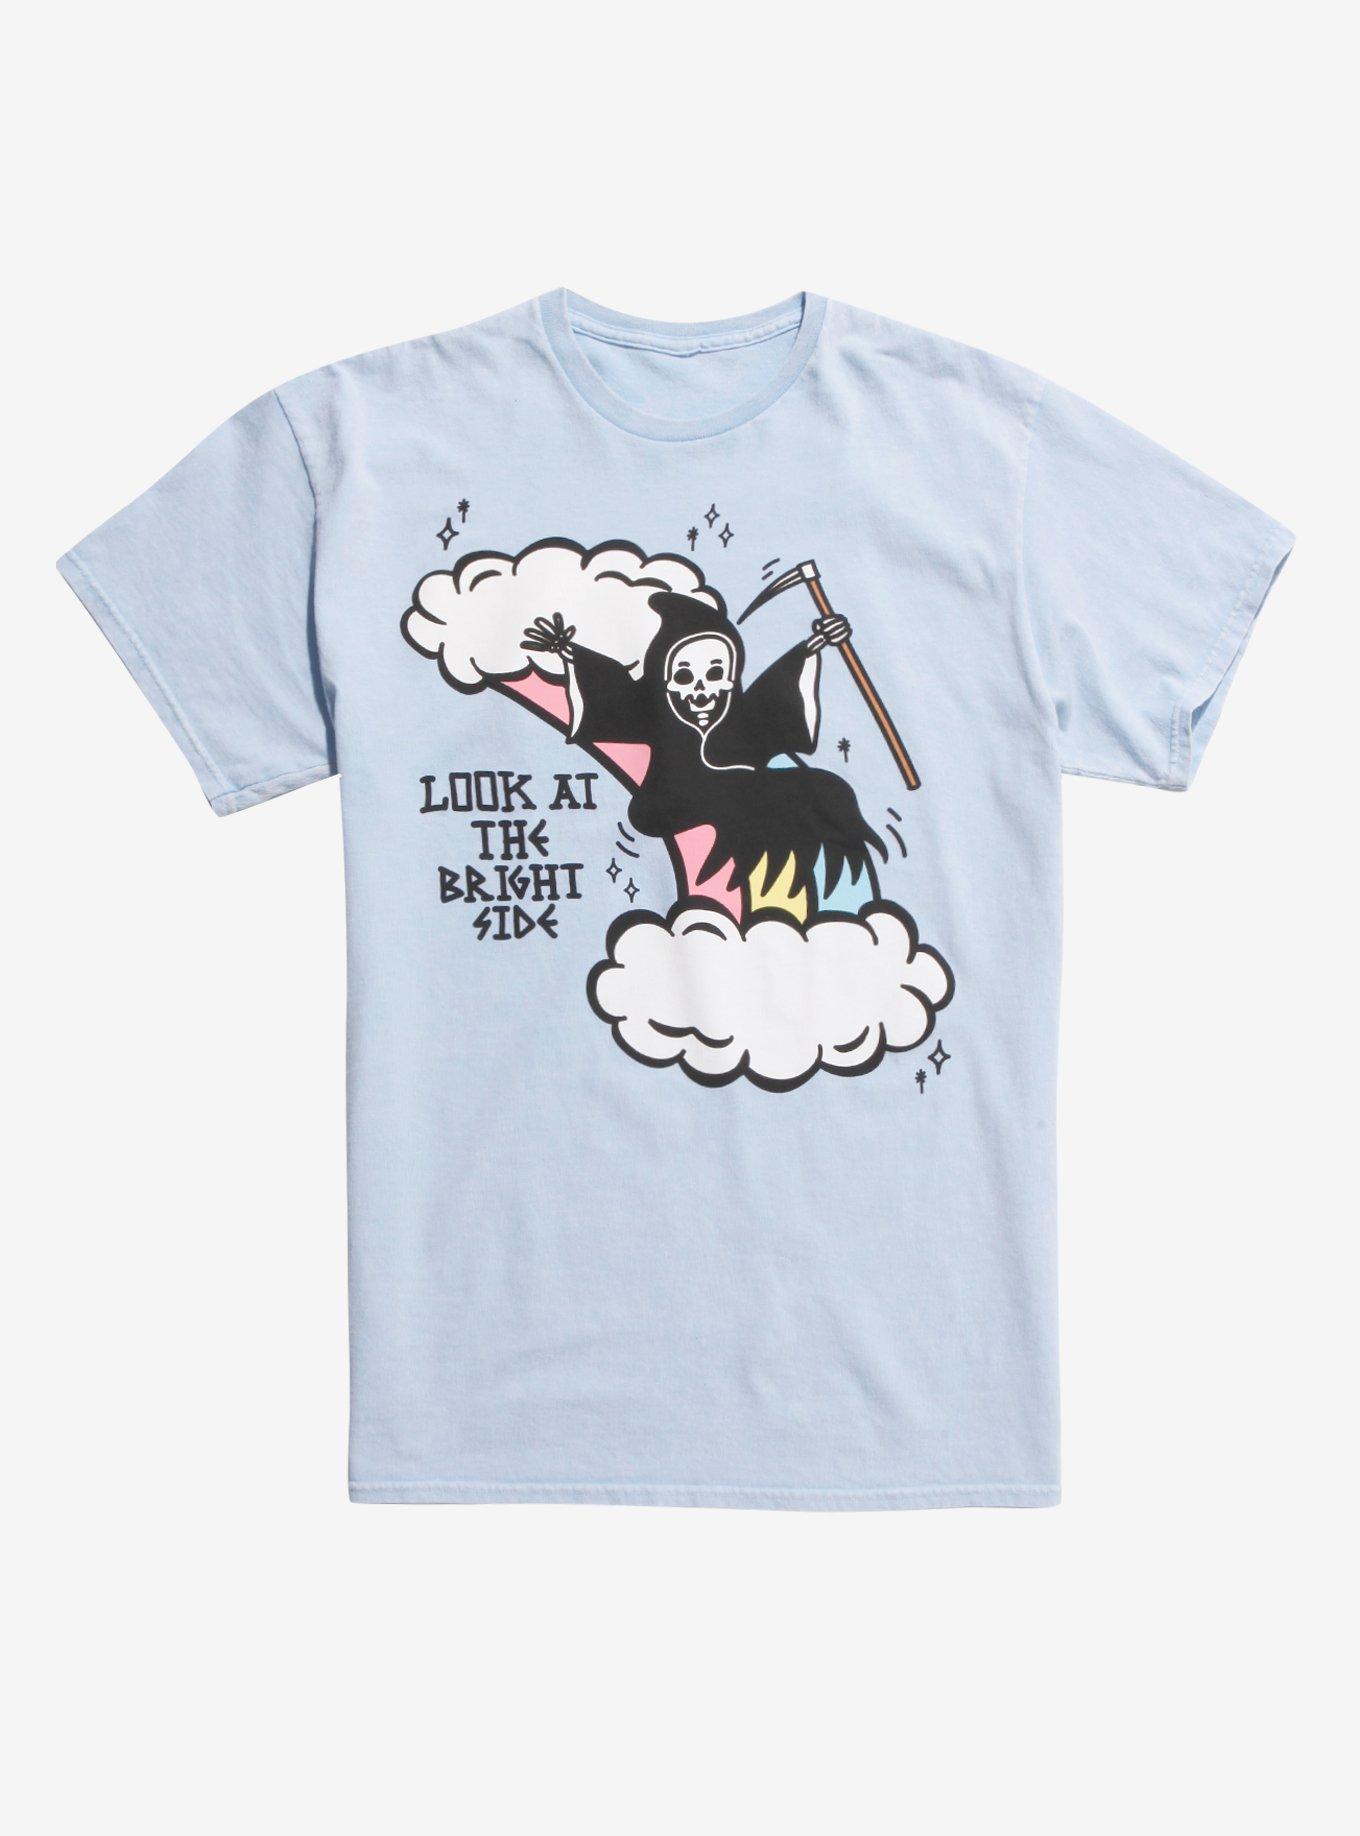 Grim Reaper Rainbow Look At The Bright Side T-Shirt, MULTI, hi-res